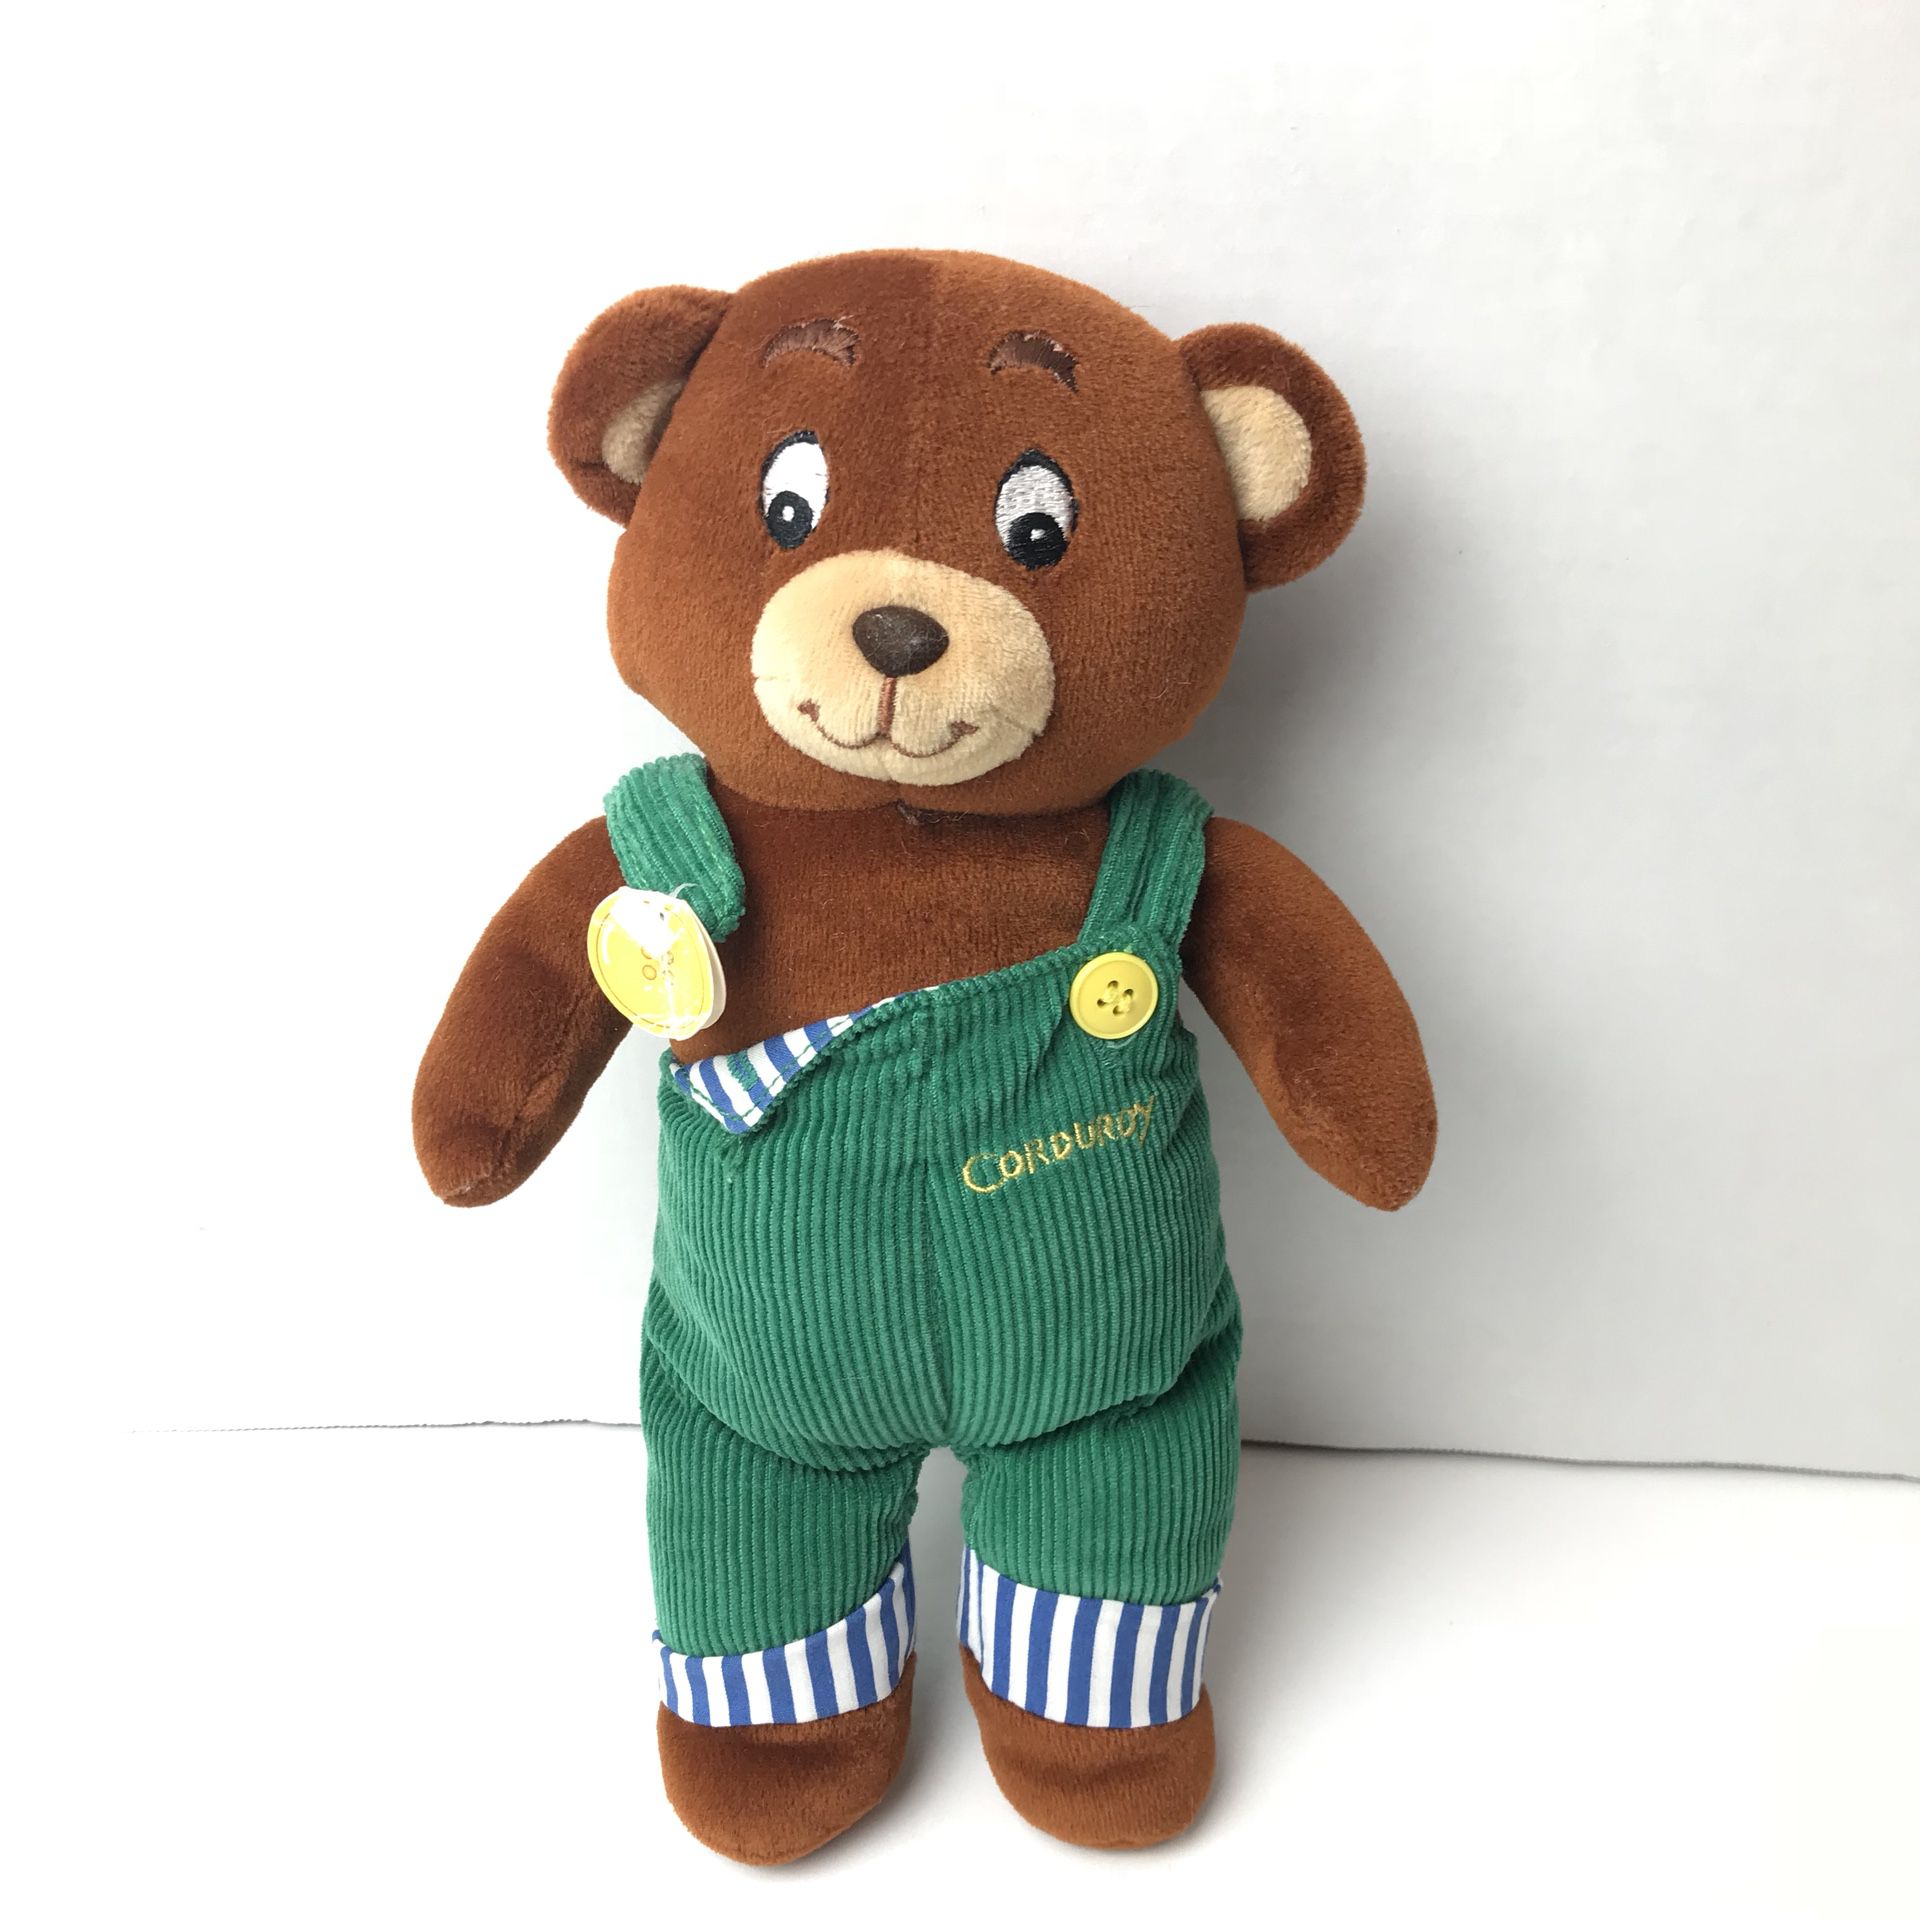 Vintage 1997 Corduroy Bear Plush Teddy Stuffed Animal